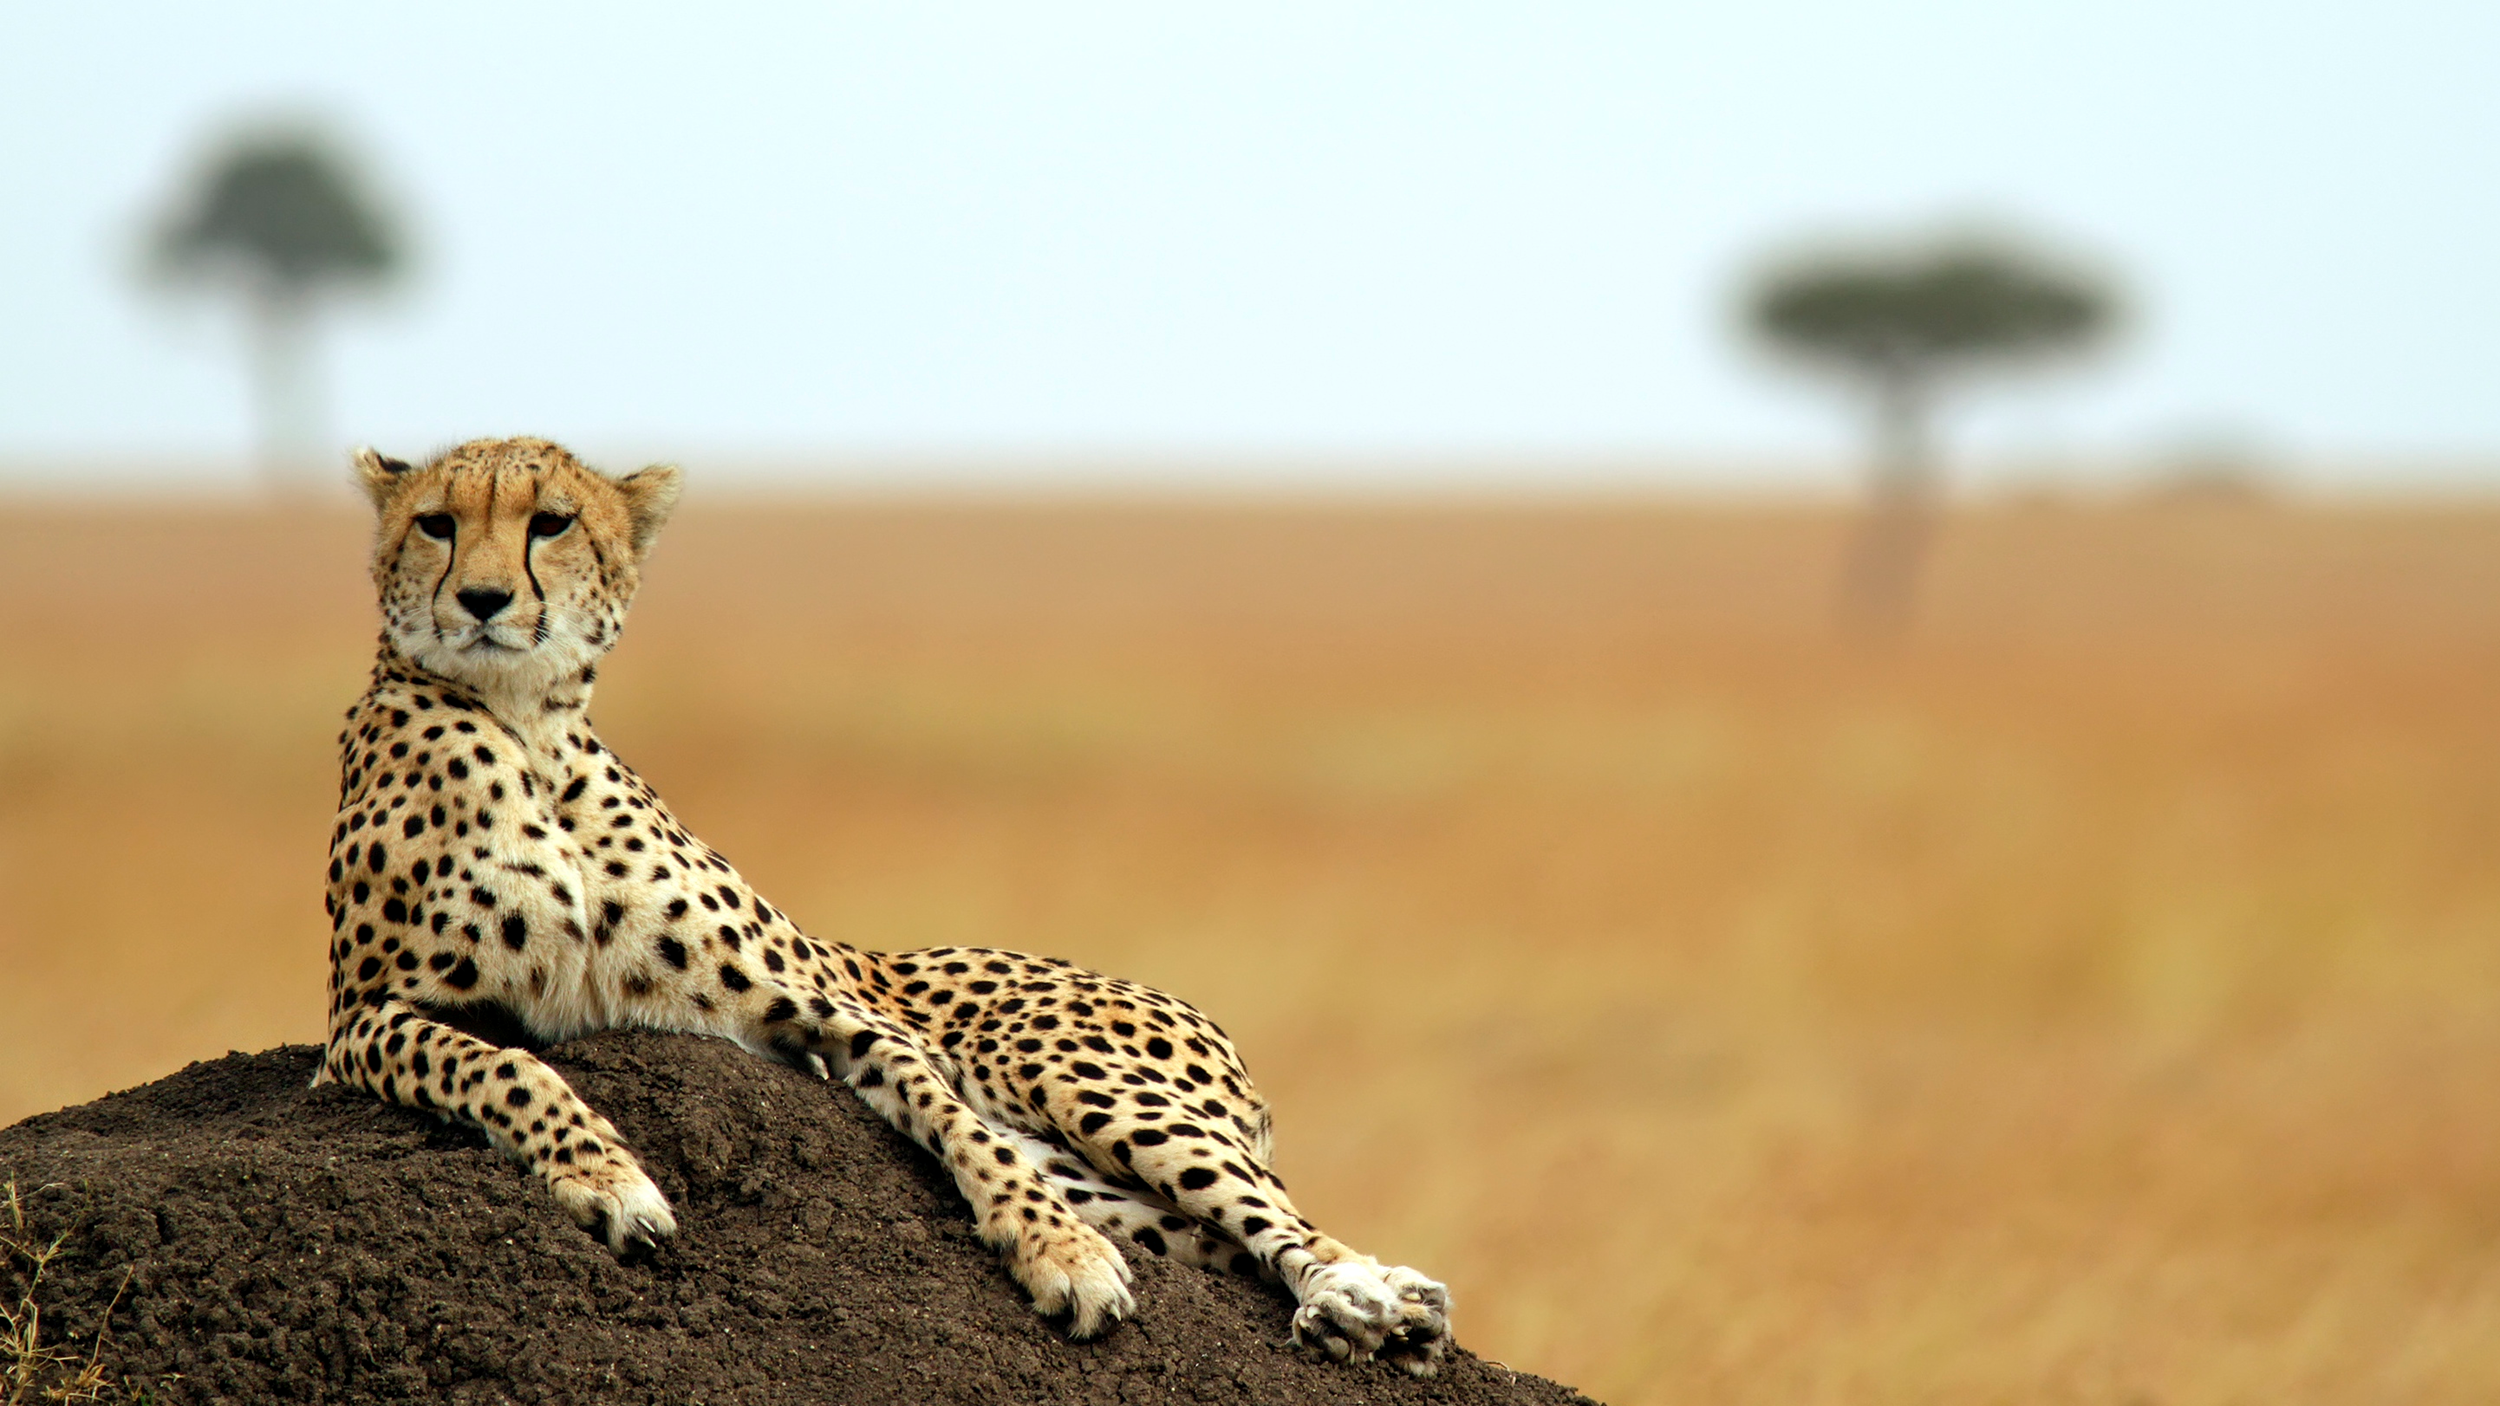 Virtually Africa: Wildlife and Adventure Awaits